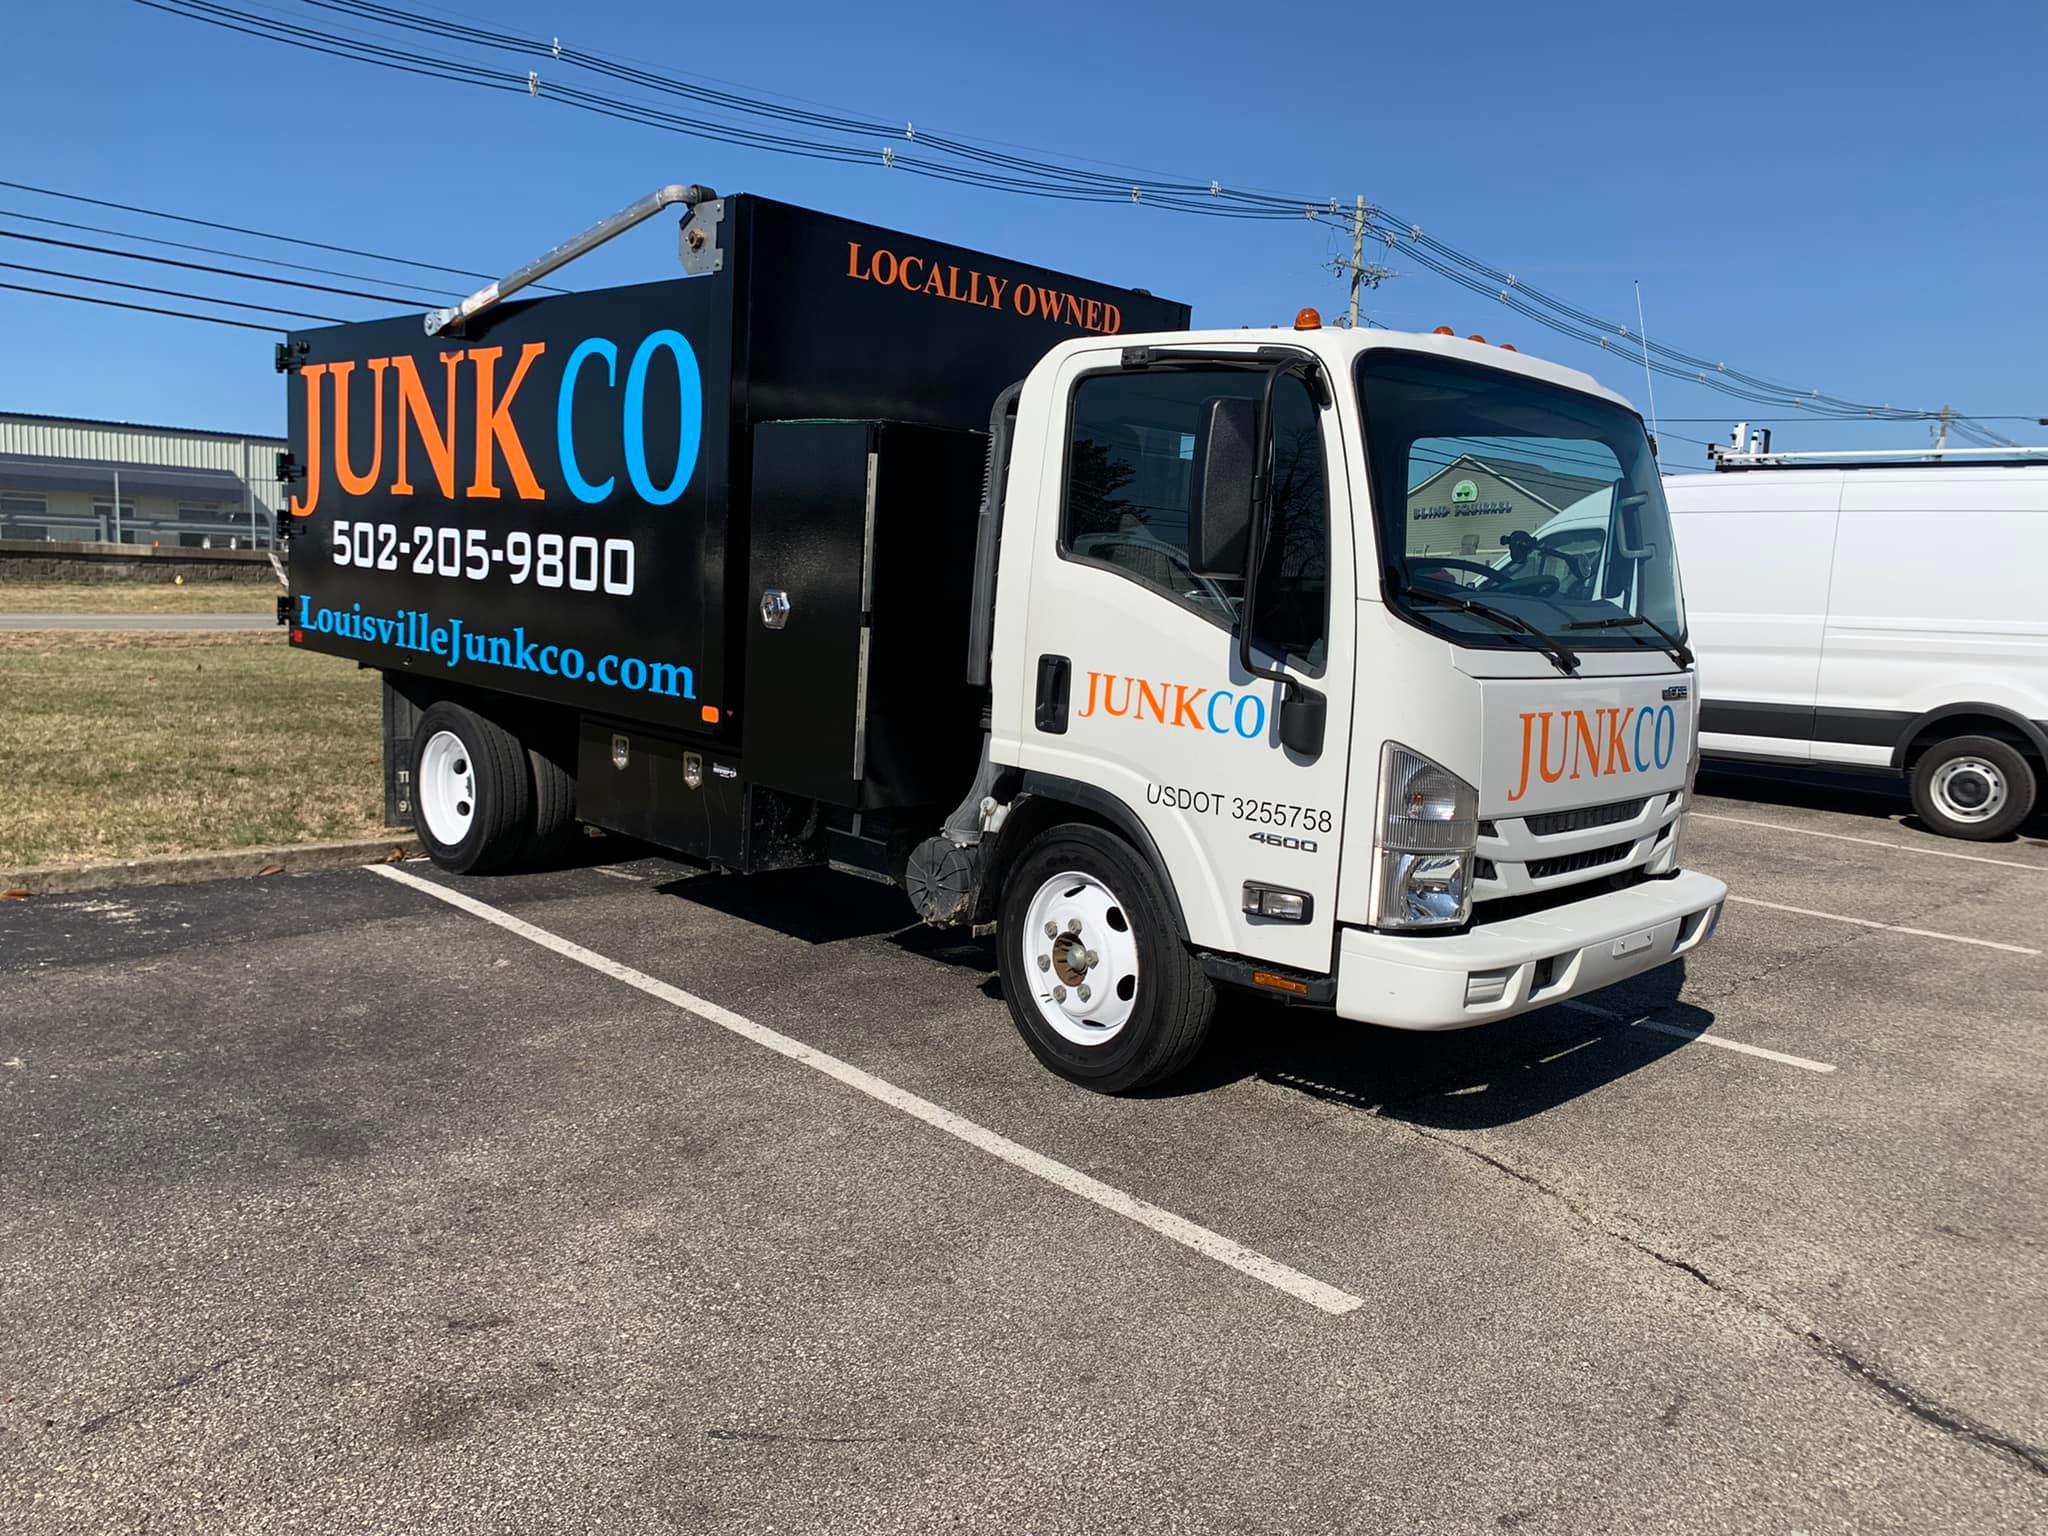 JUNKCO, LLC